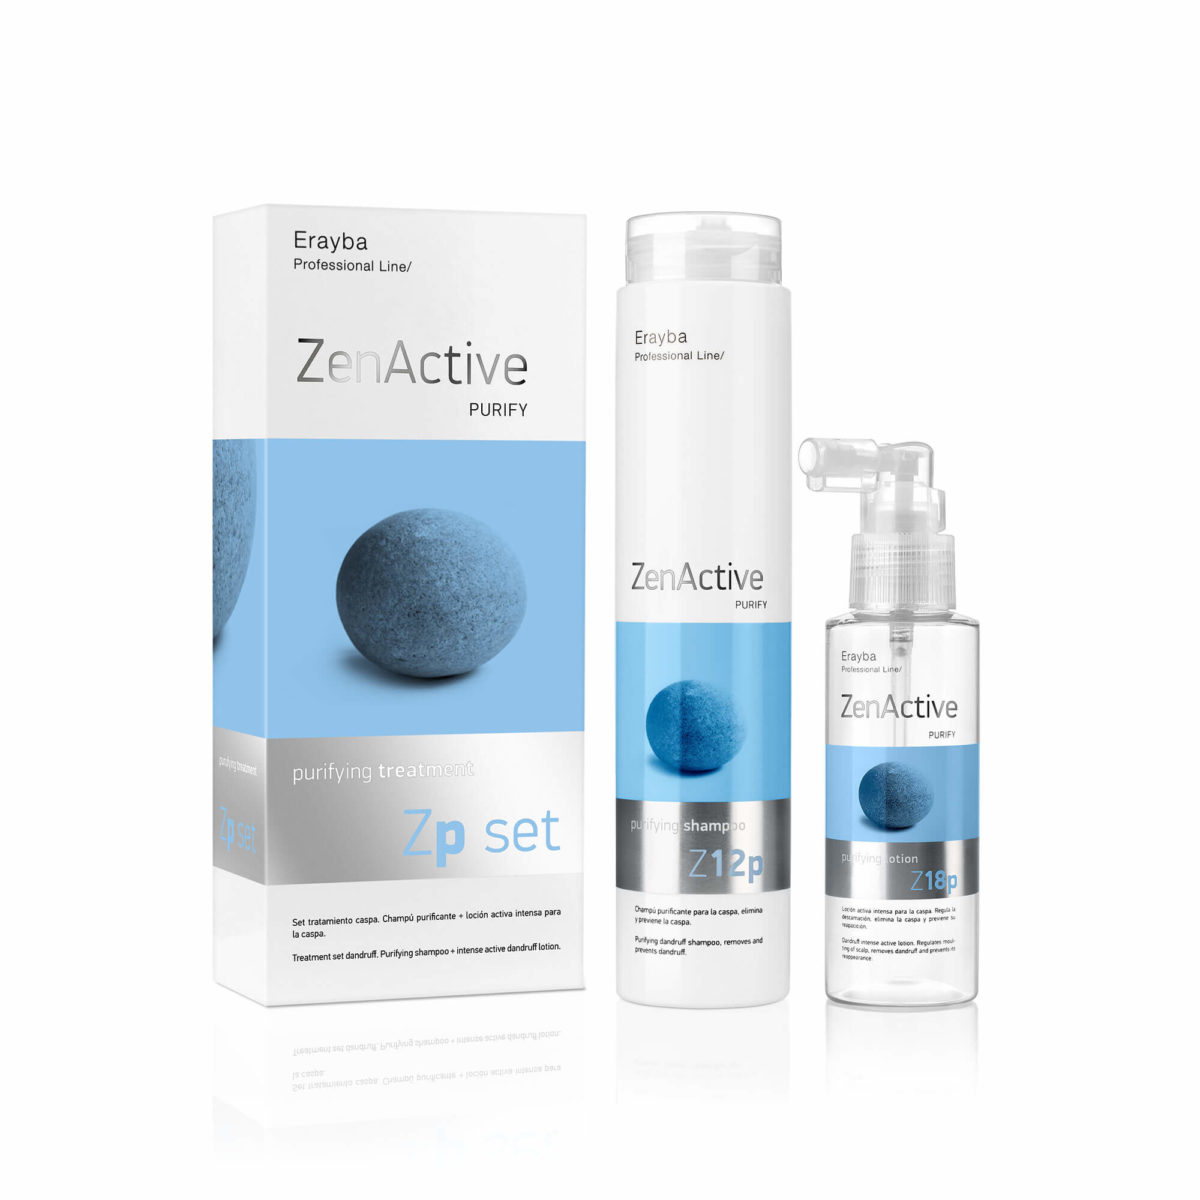 Erayba Zen Active Zp set purifying treatment